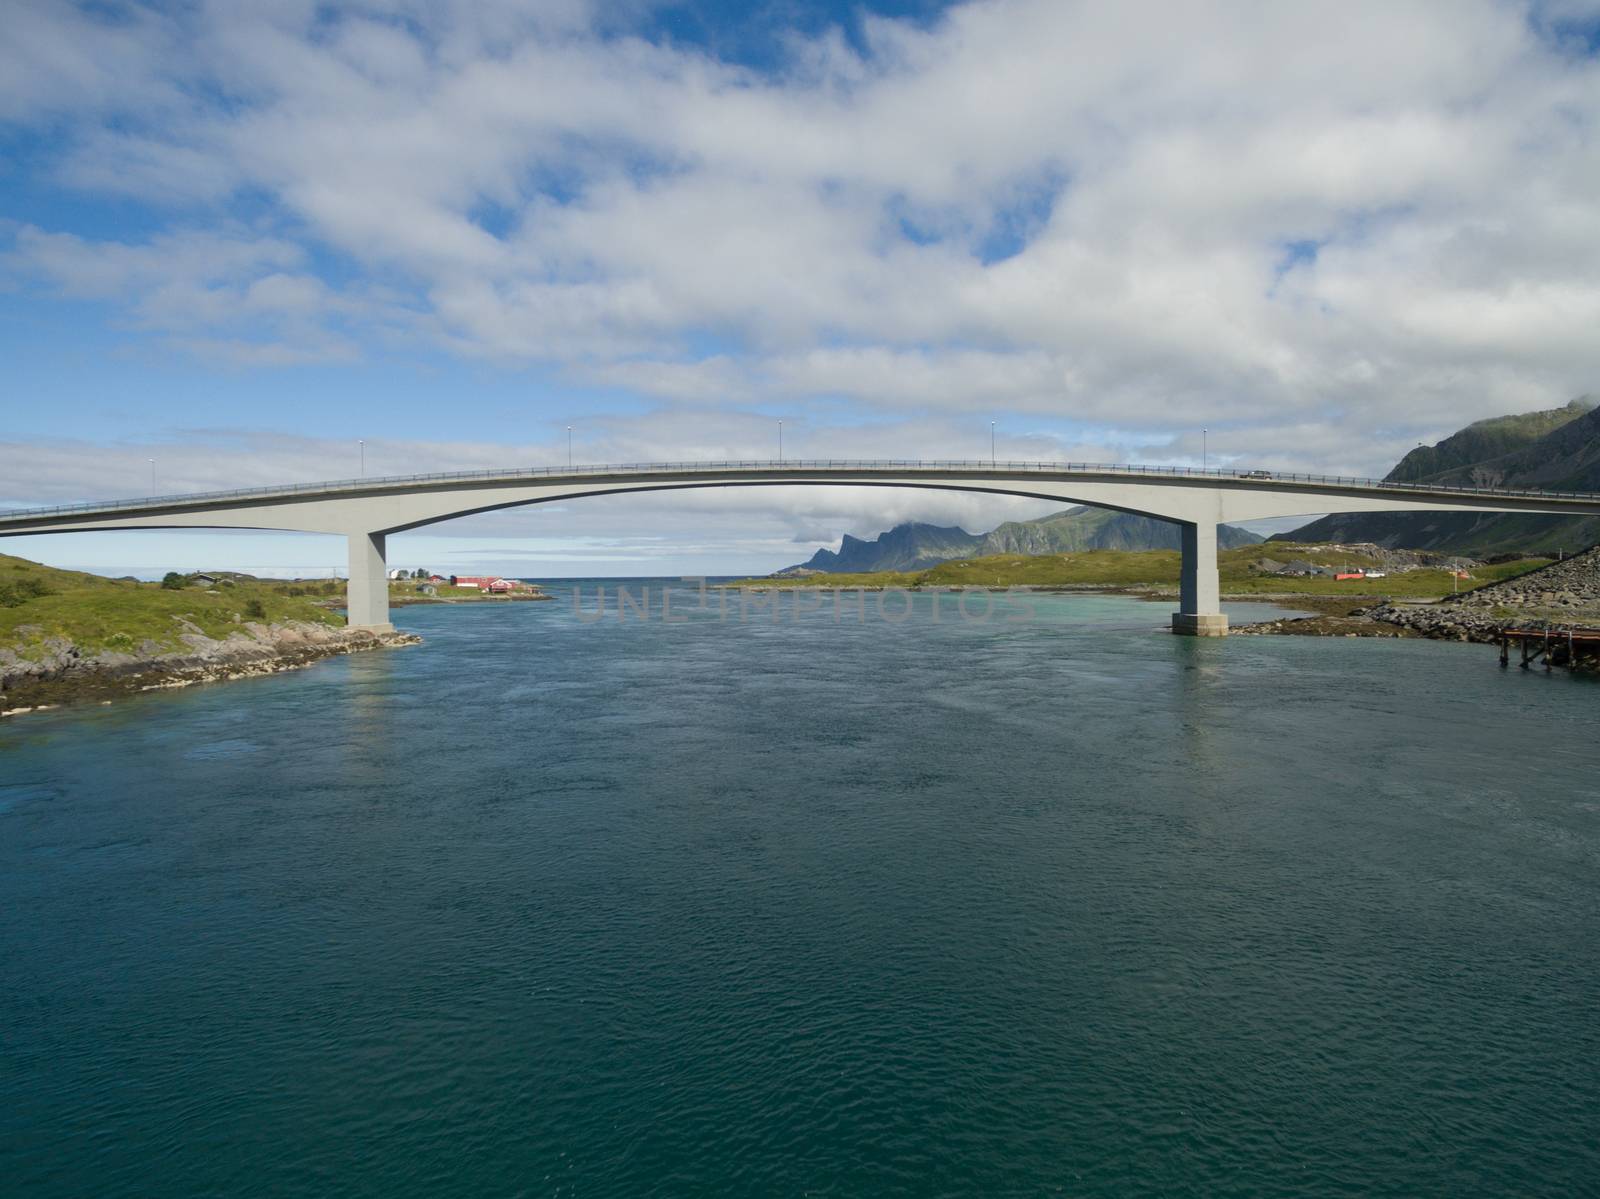 Bridge in Norway by Harvepino